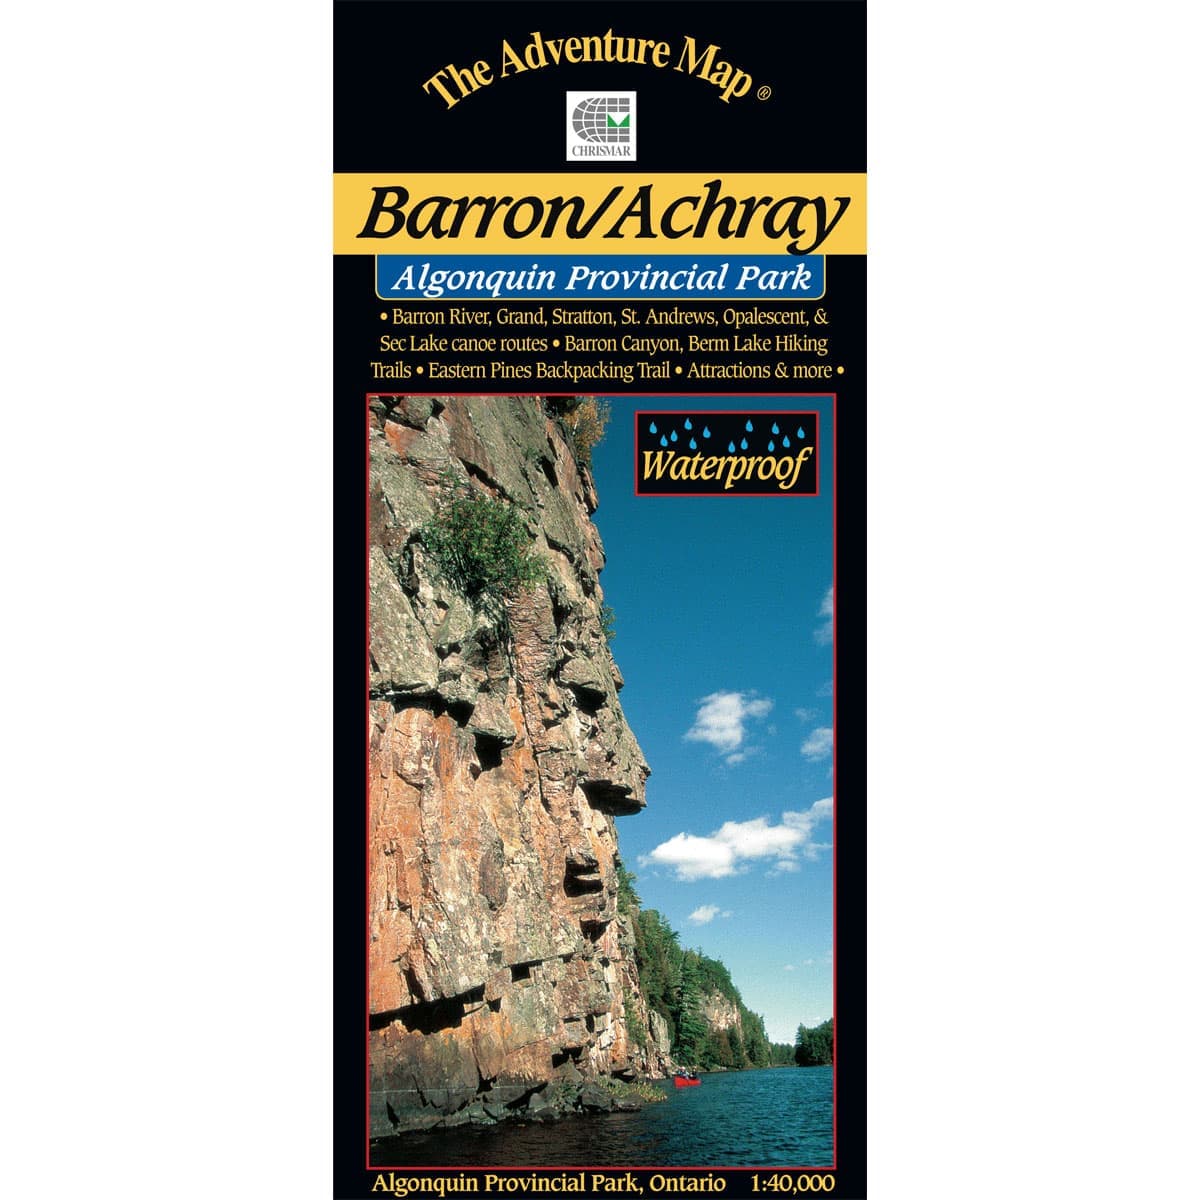 The Adventure Map Algonquin Barron / Achray